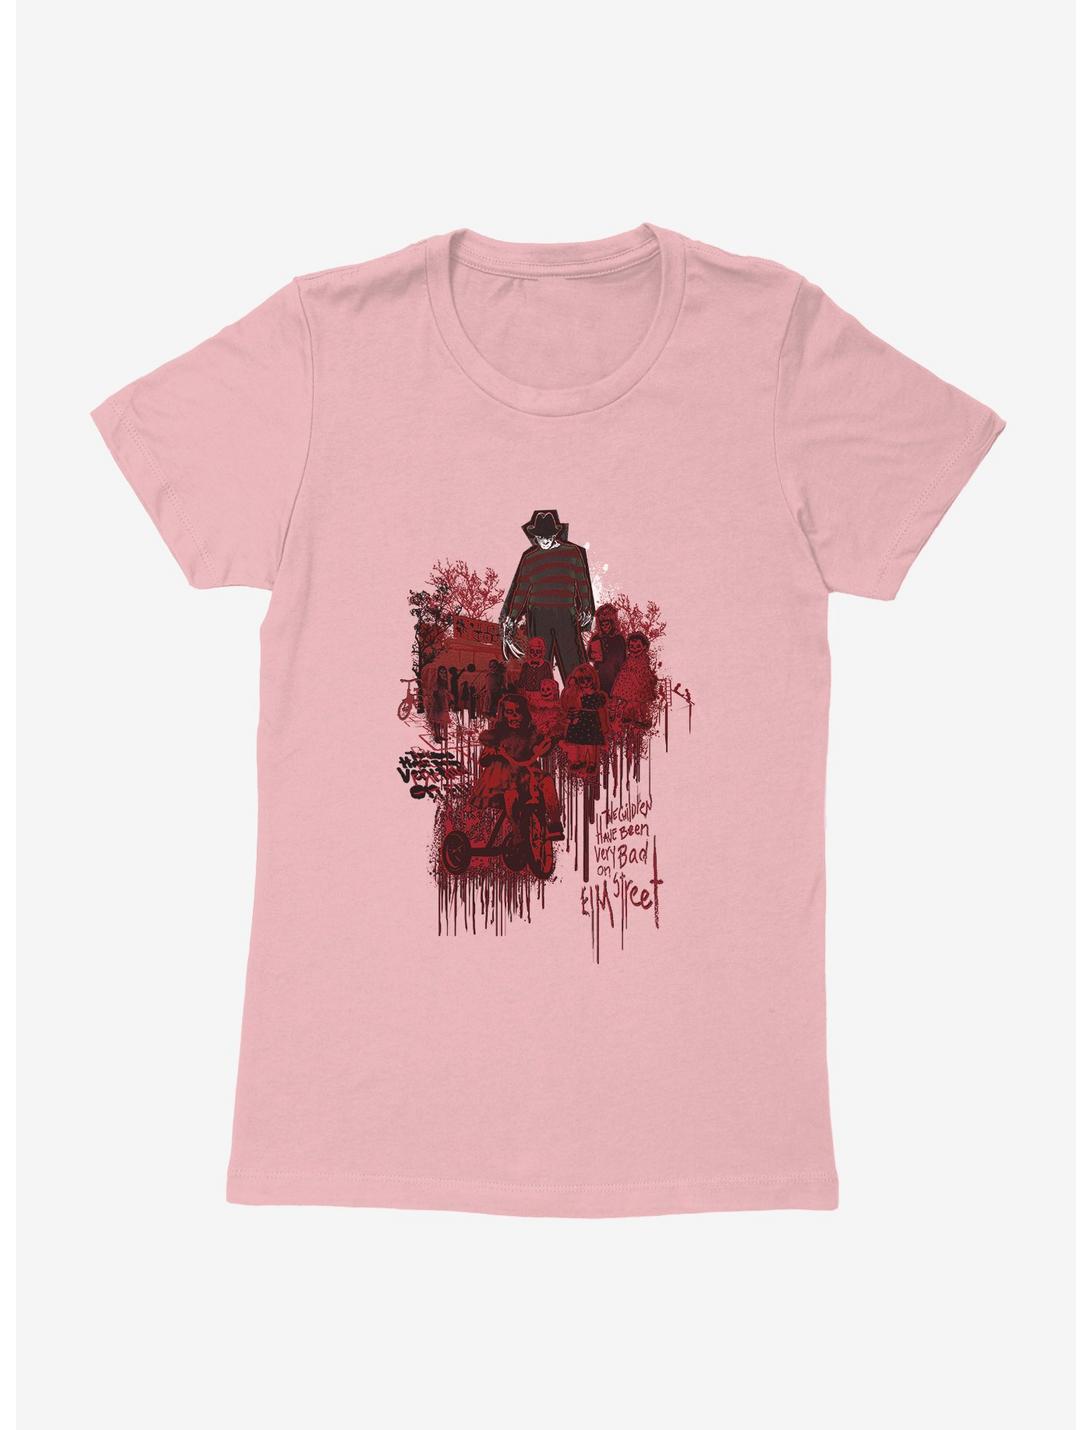 A Nightmare On Elm Street Bad Children Womens T-Shirt, LIGHT PINK, hi-res